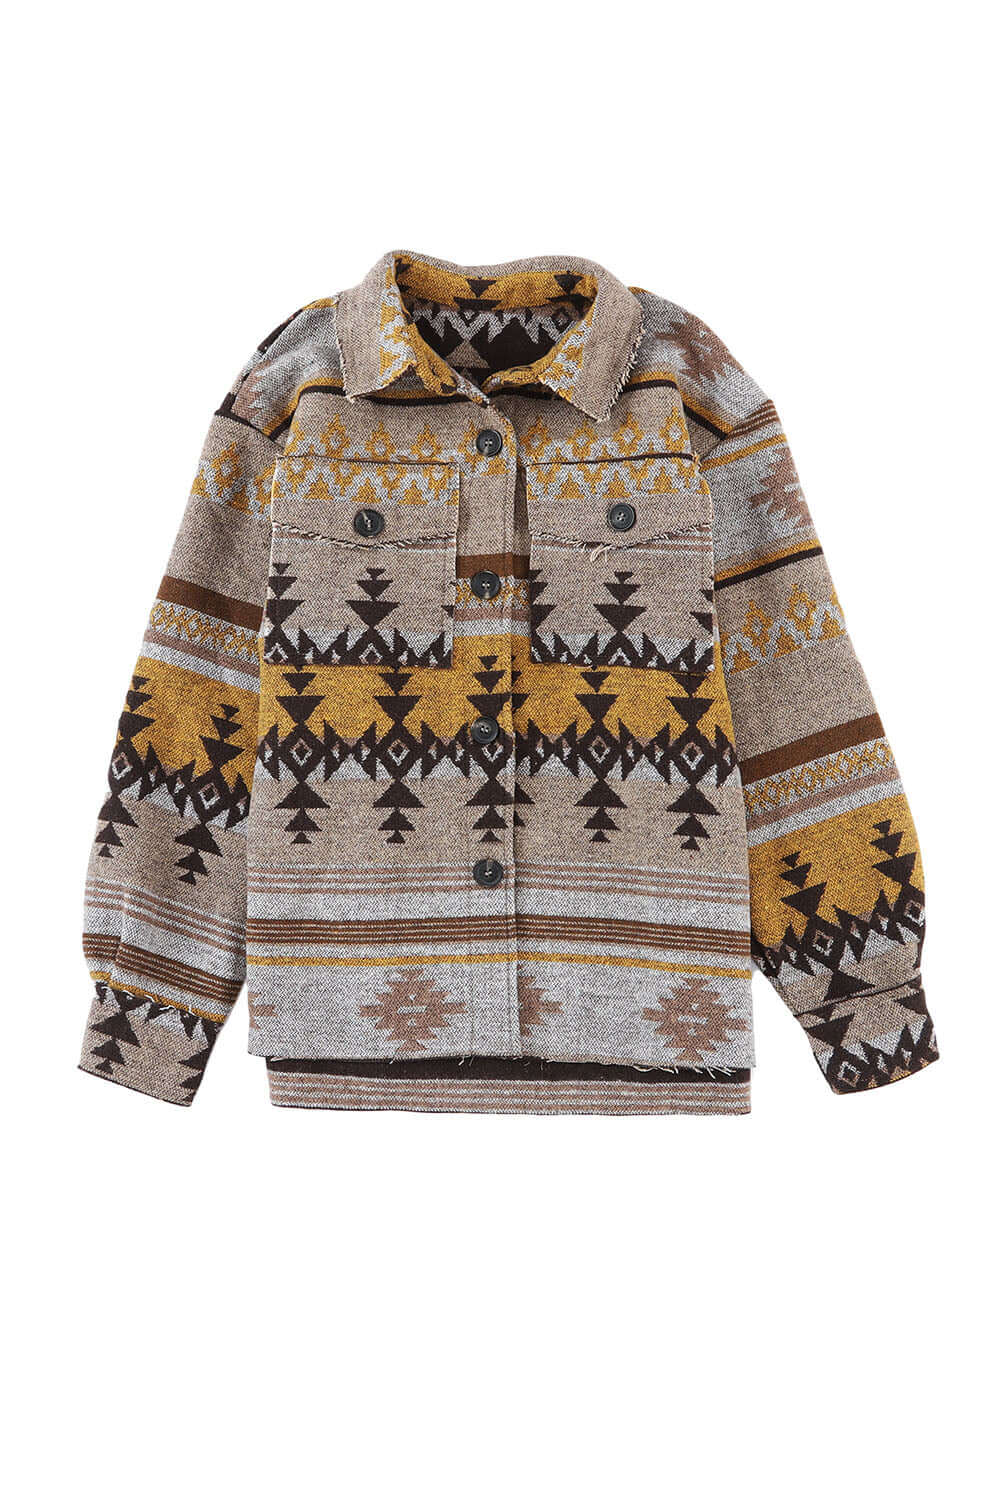 Brown Western Aztec Print Jacket - Dixie Hike & Style